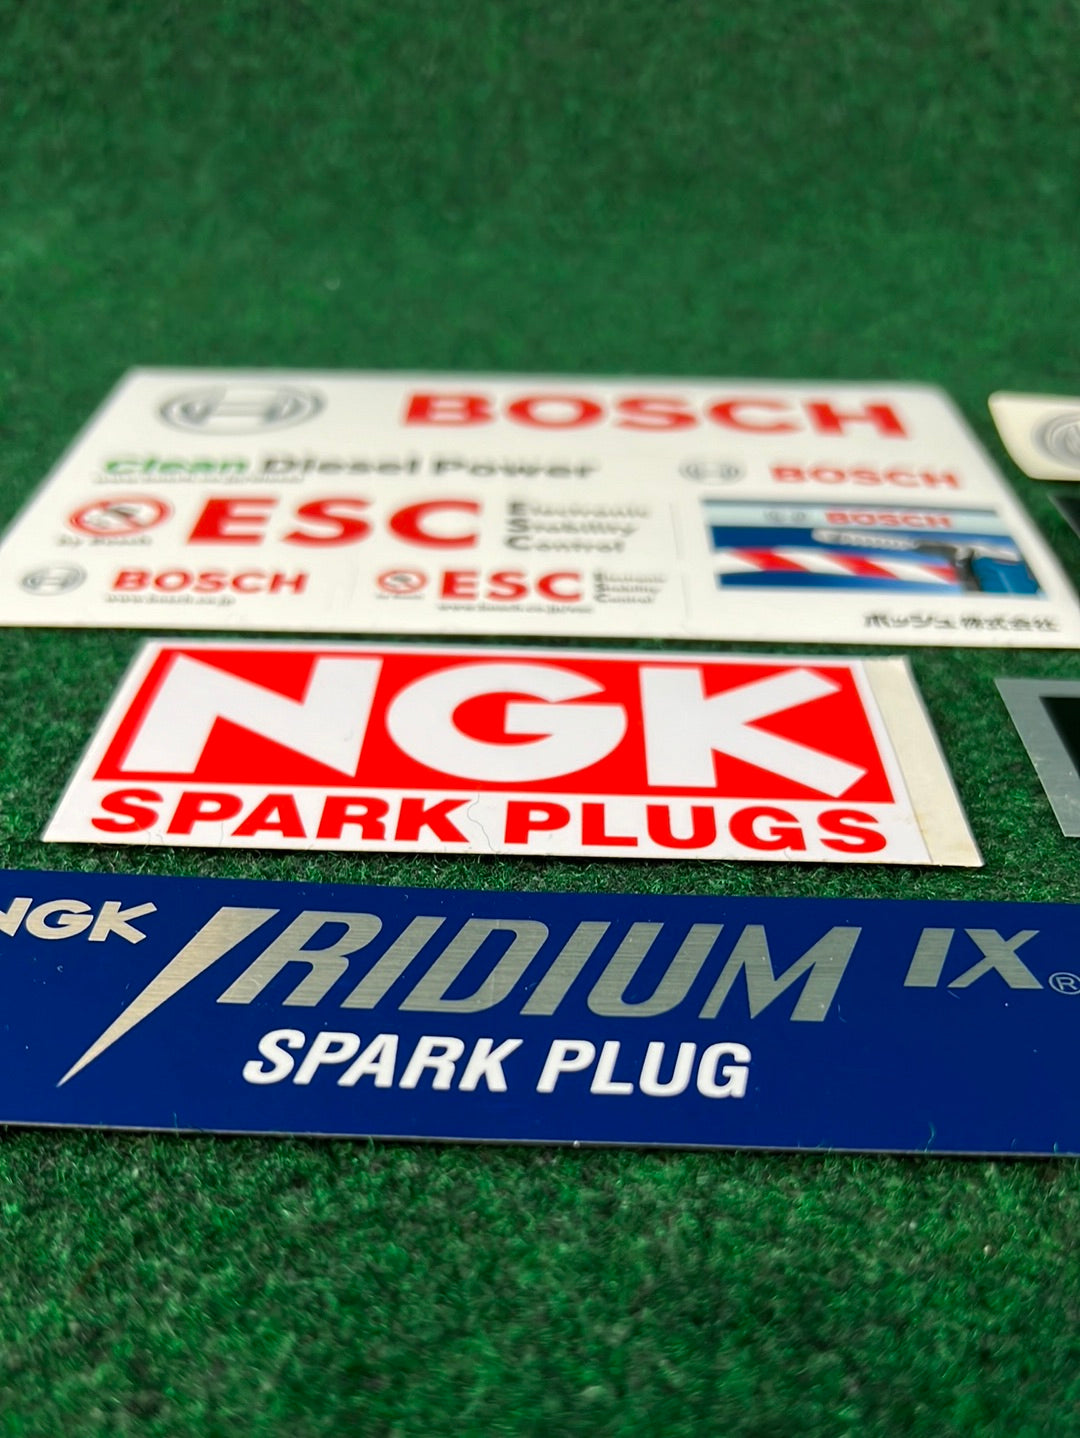 Sticker Set - PIAA, NGK, Philips, BOSCH